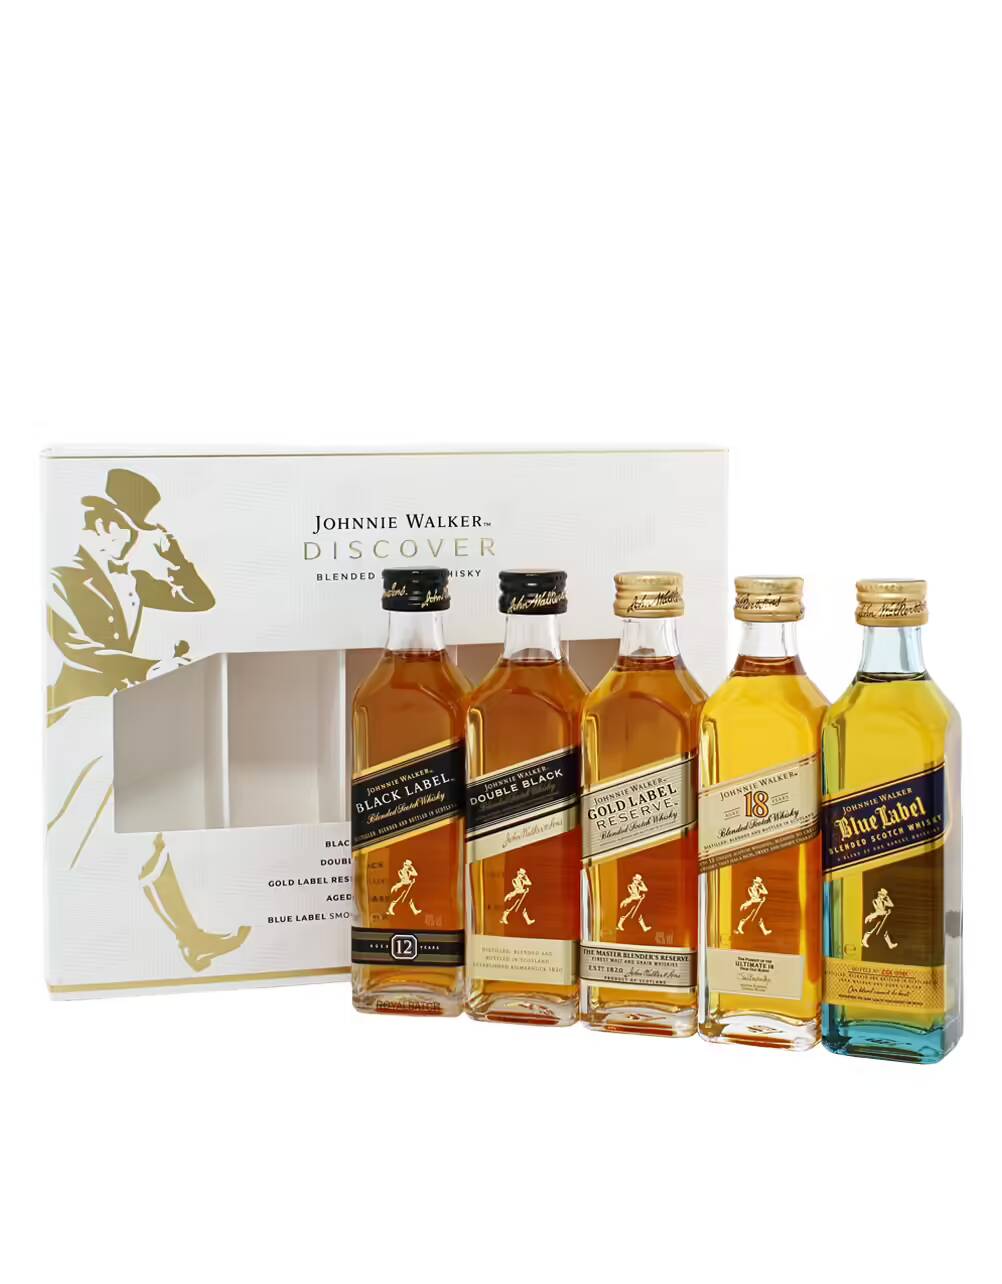 Johnnie Walker Discover set Blended scotch Whisky (5 Pack) 50ml